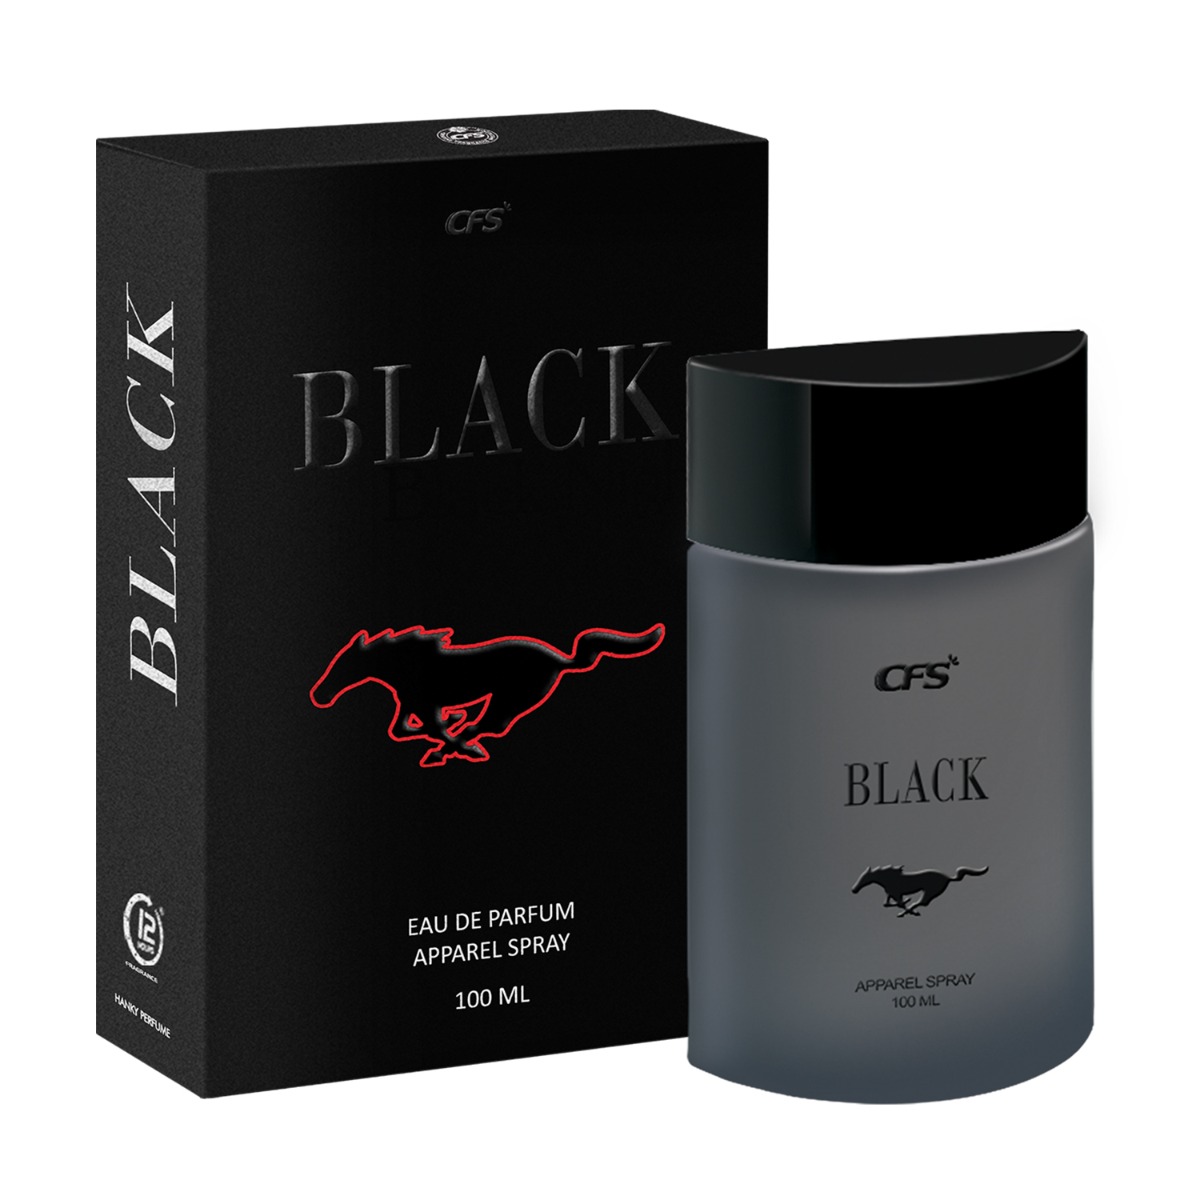 CFS Black Long Lasting Apparel parfum Spray, 100ml